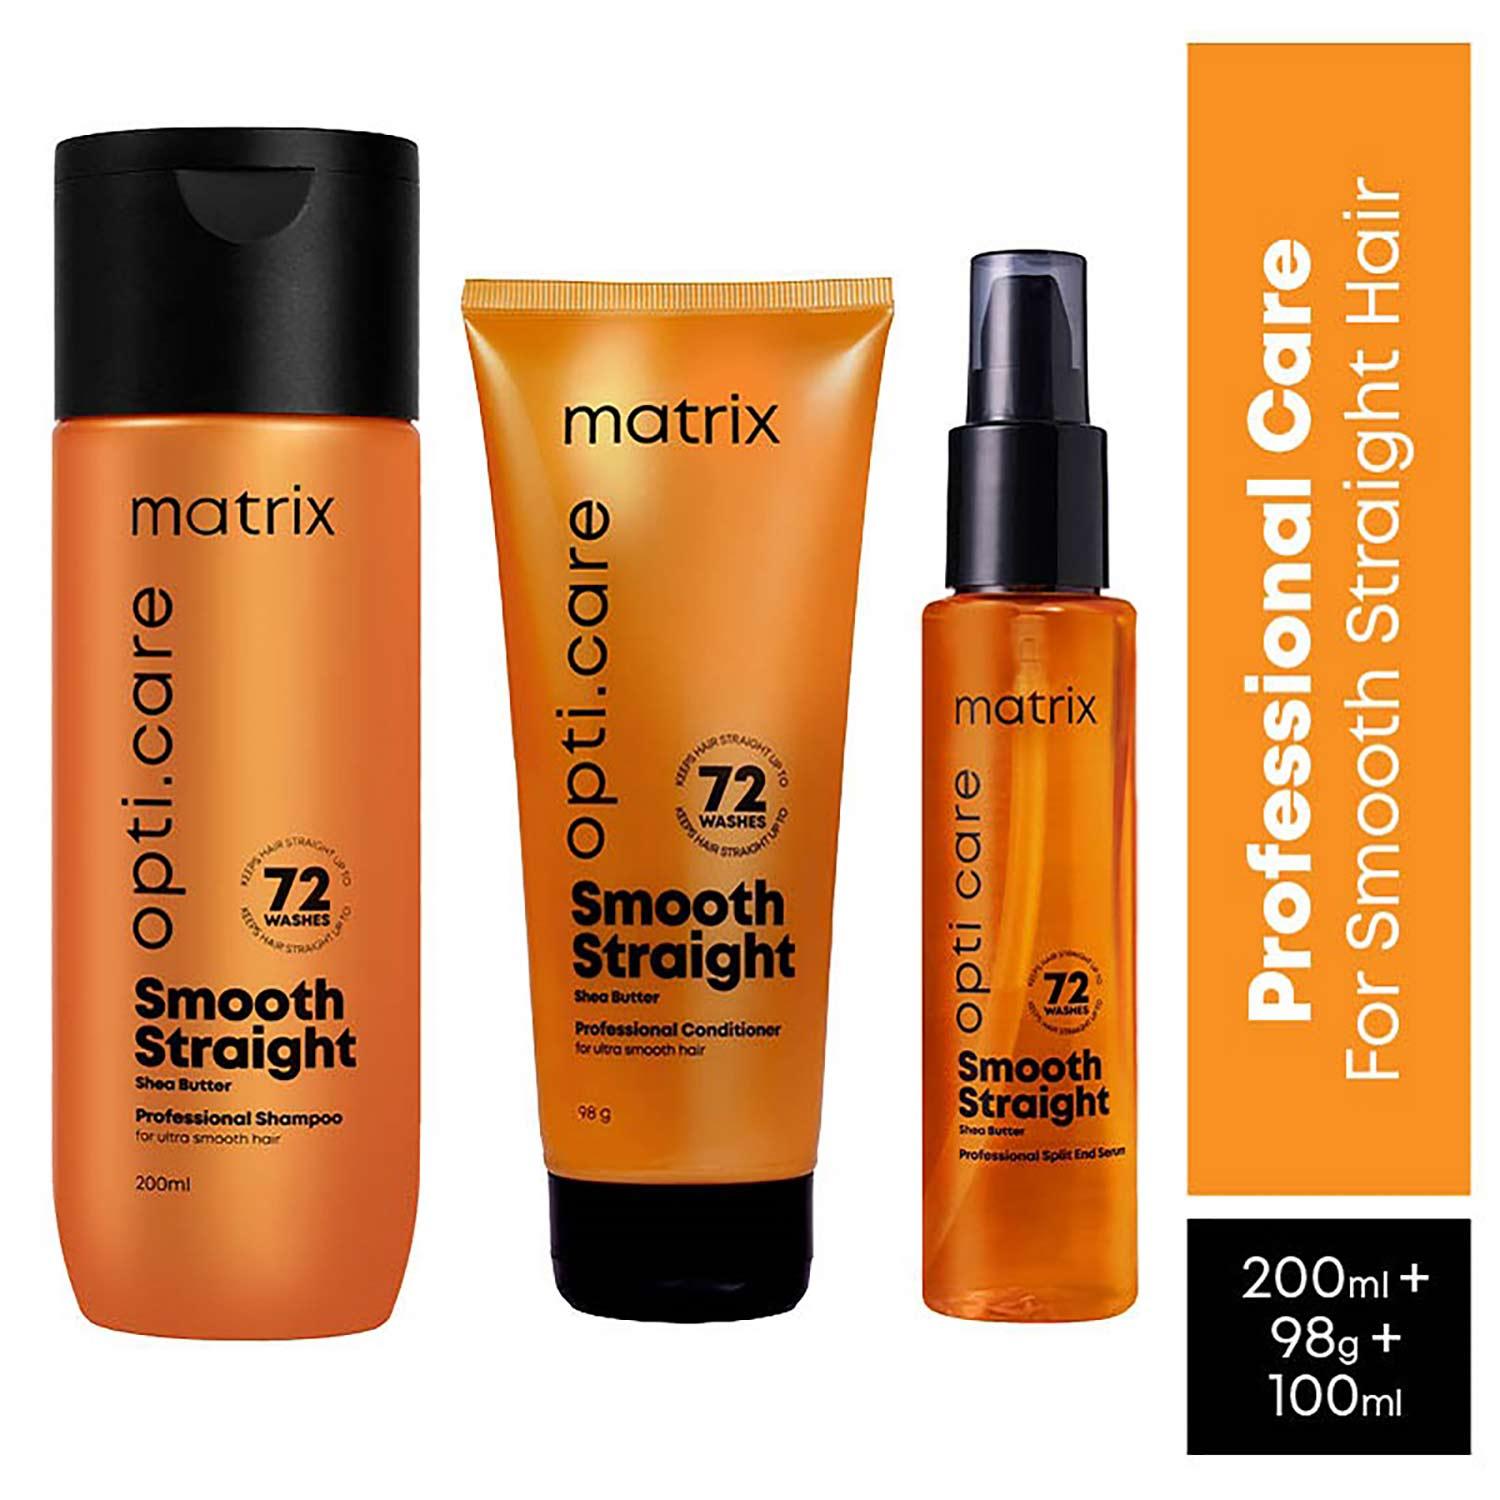 Matrix, Tira: Shop Makeup, Skin, Hair & Beauty Products Online